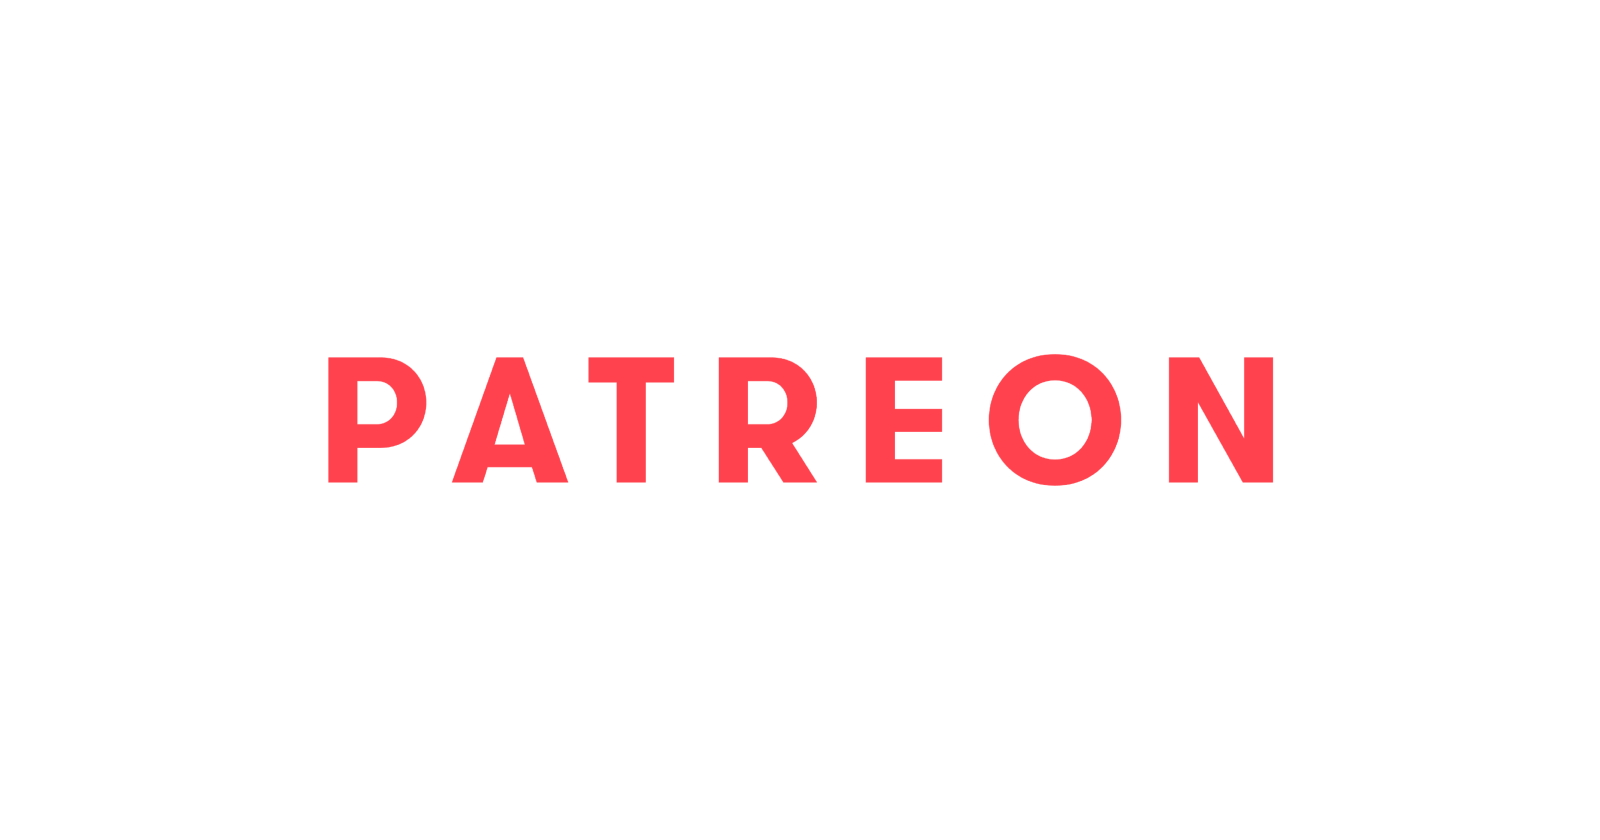 Art patreon.com